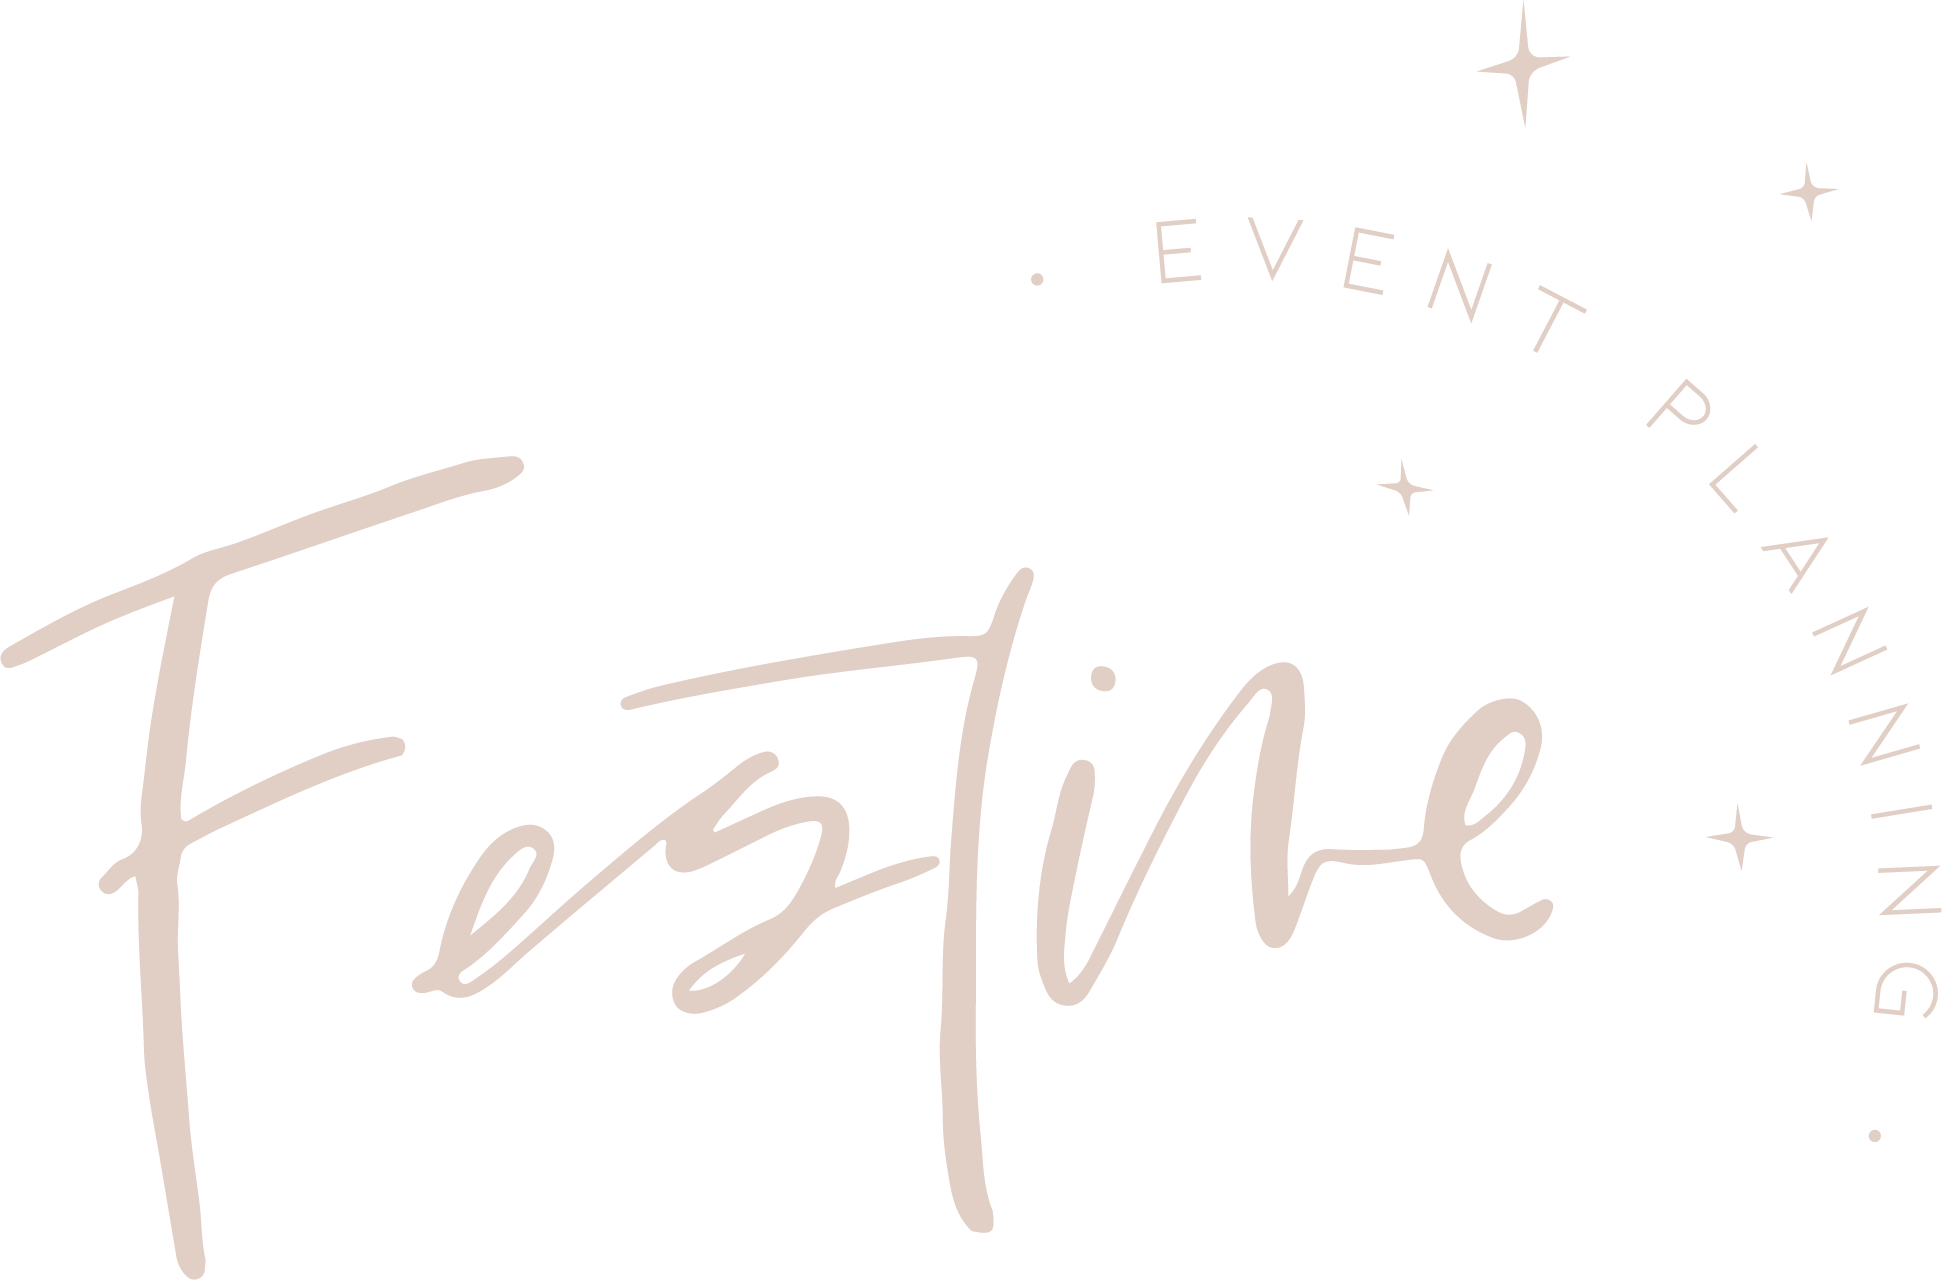 Festive Event Planning